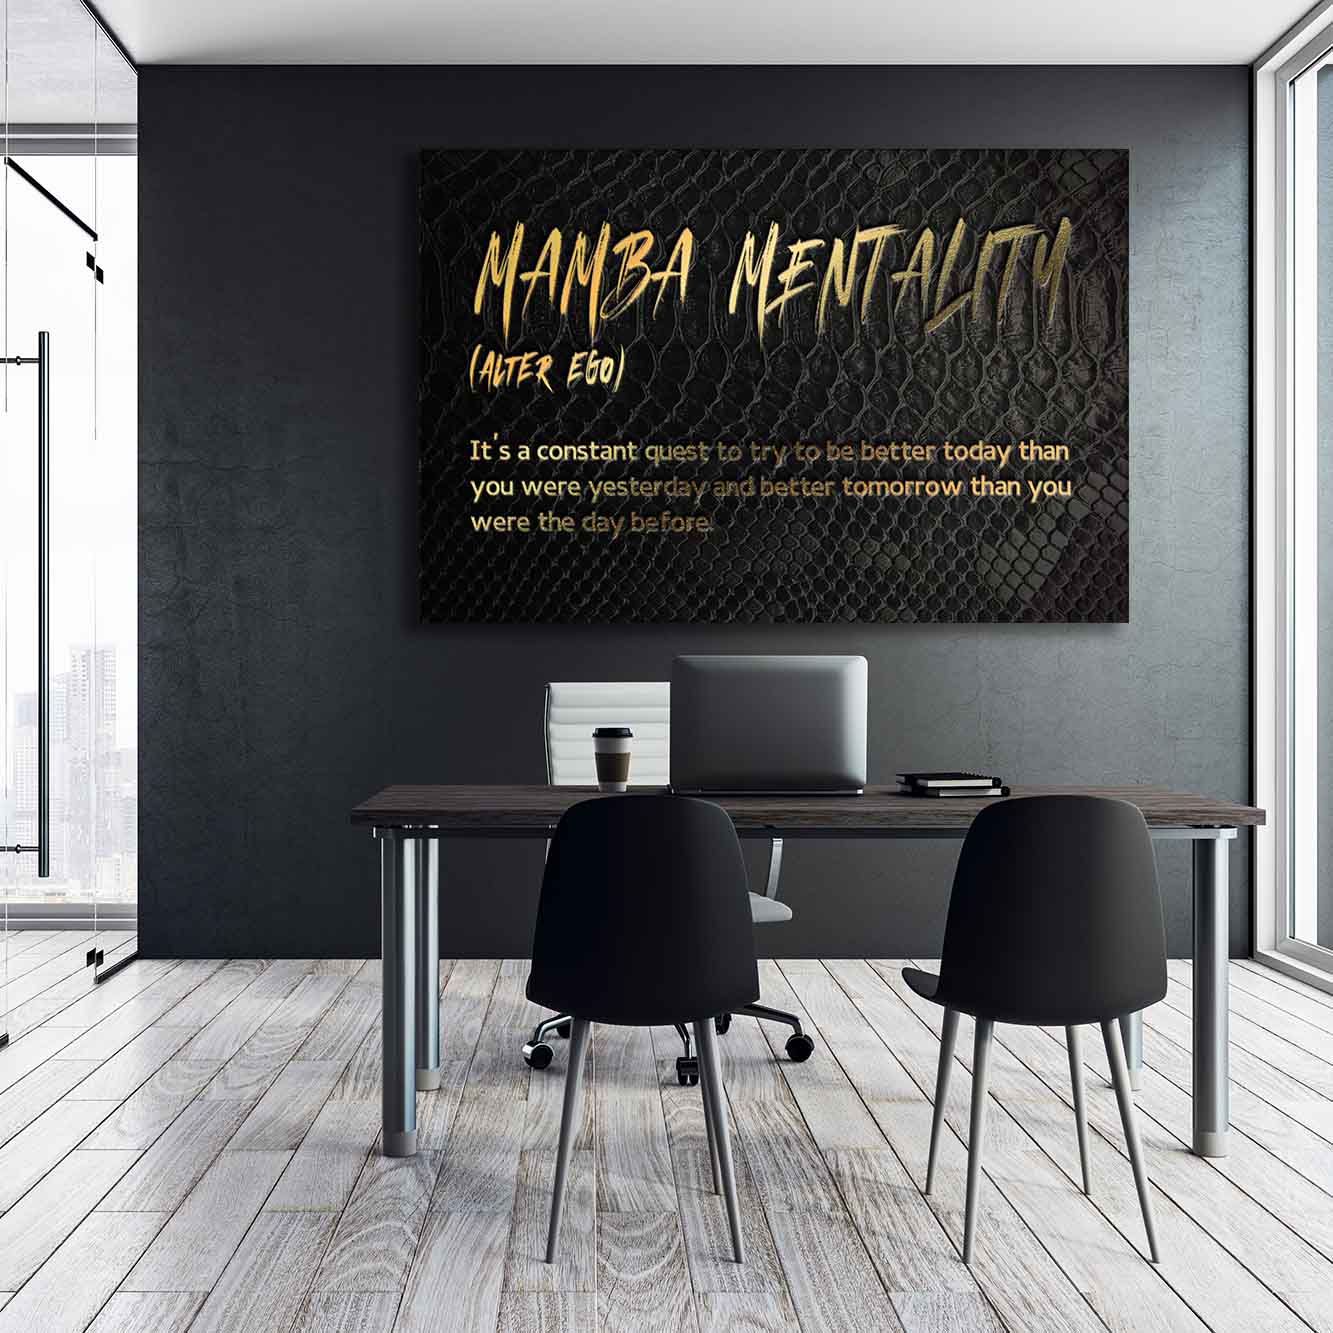 Mamba Mentality (Alter Ego) - Kobe Bryant Inspired Wall Art | Inspirational Wall Art Motivational Wall Art Quotes Office Art | ImpaktMaker Exclusive Canvas Art Landscape